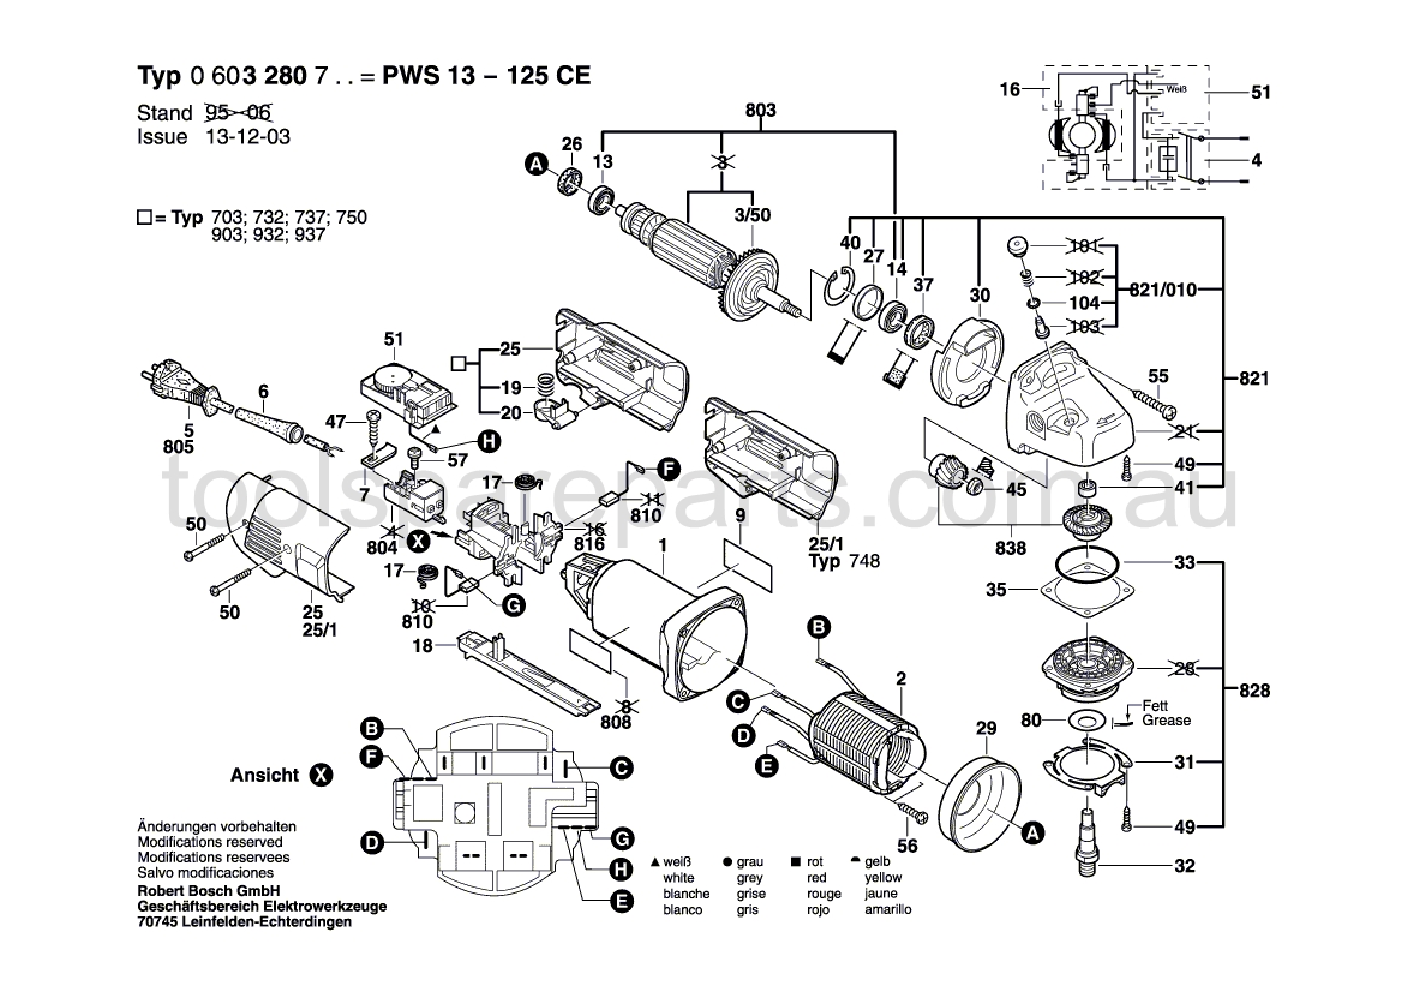 Bosch PWS 13-125 CE 0603280937  Diagram 1